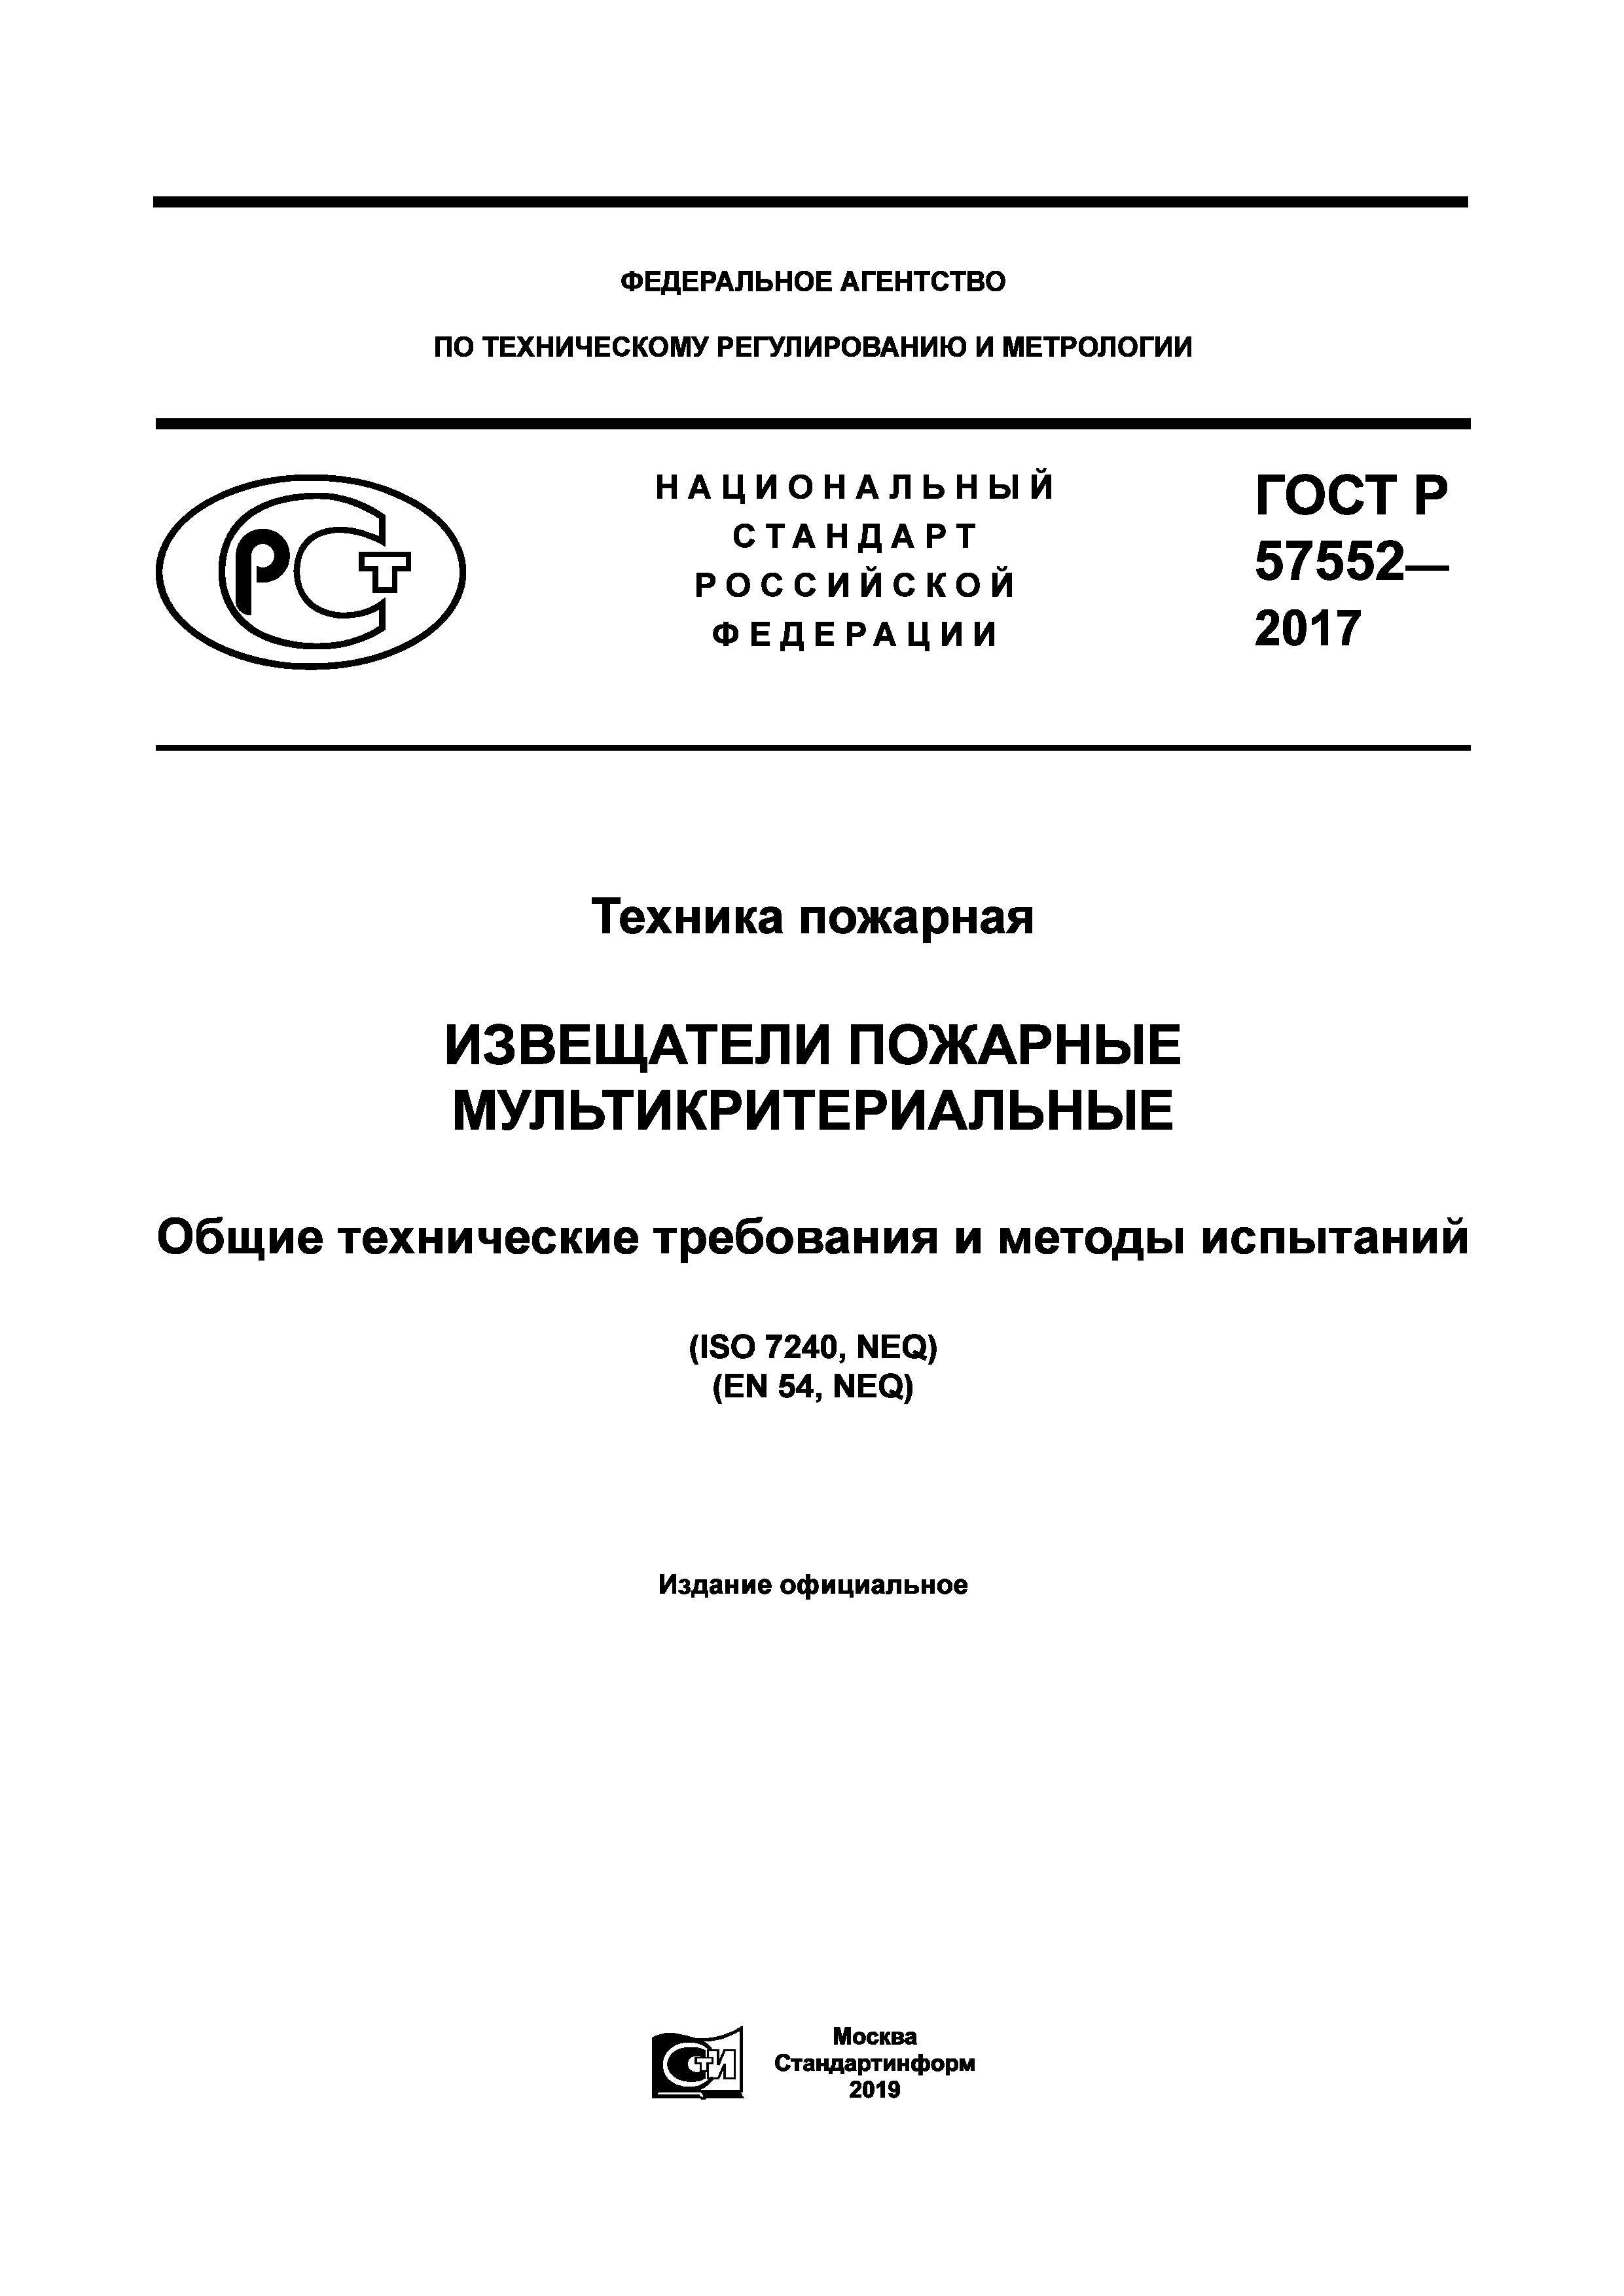 ГОСТ Р 57552-2017